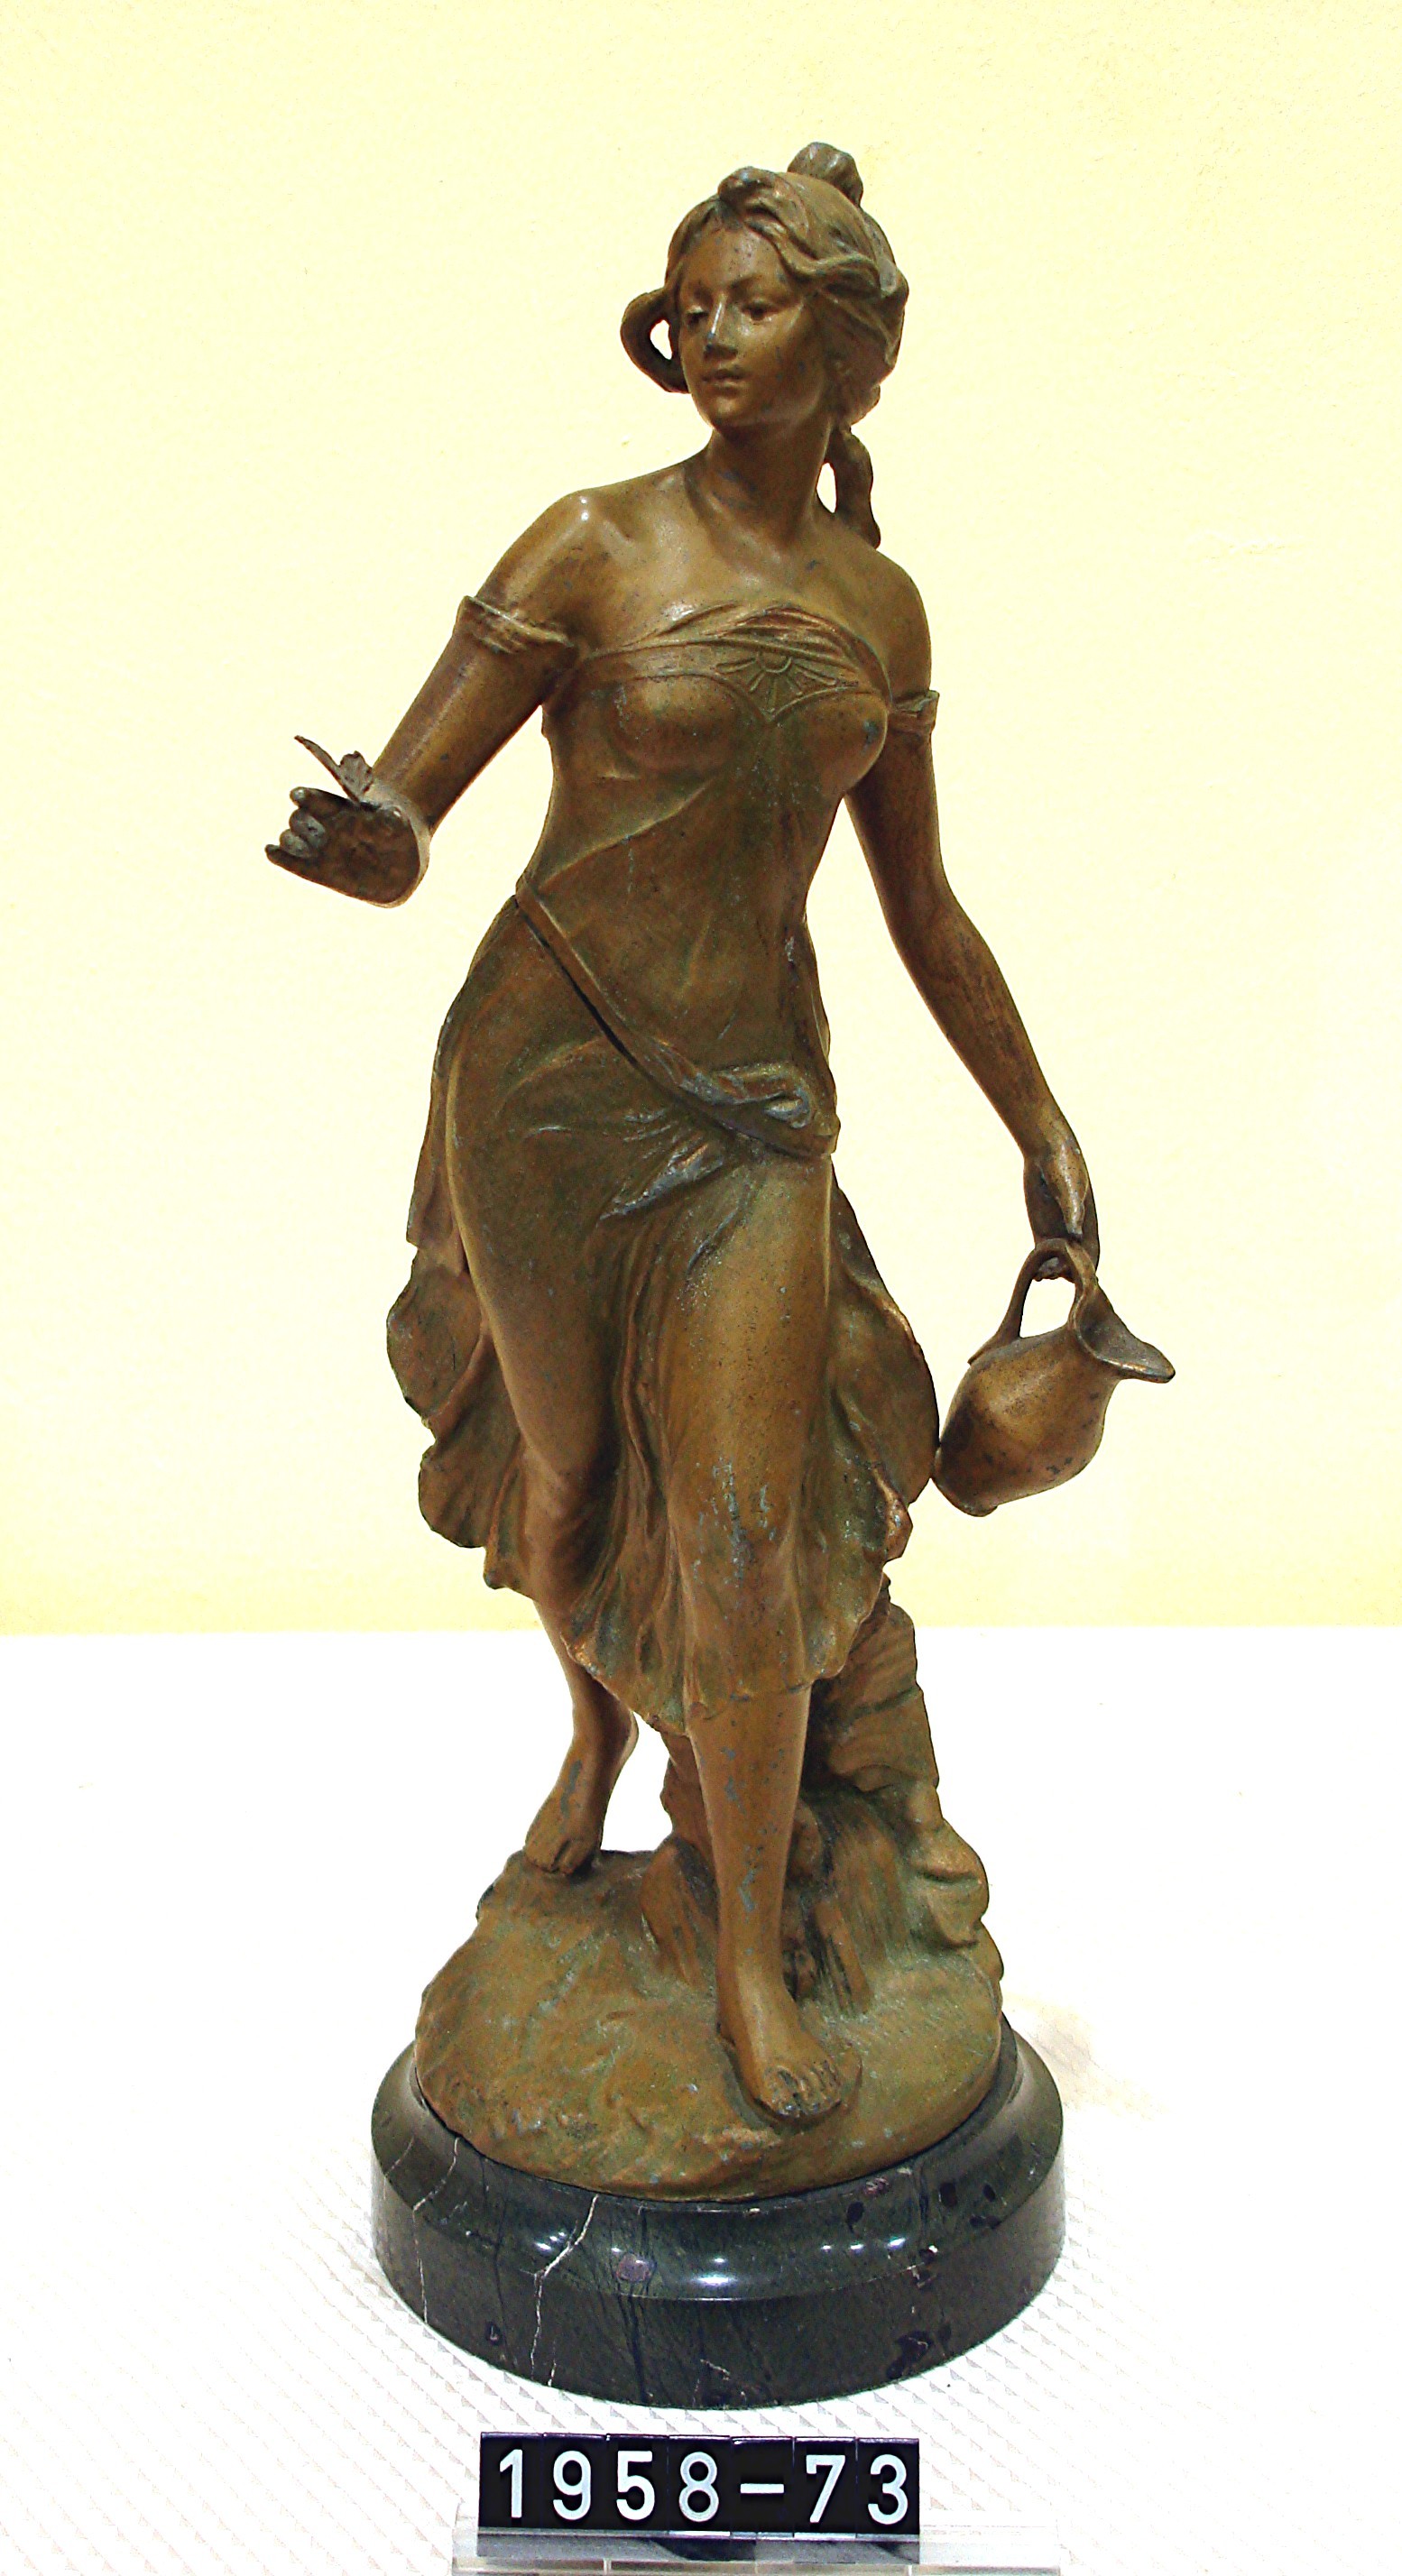 Frauenplastik; Statue aus Zinkguß; Motiv: "Frauengestalt mit Weinkrug und Schmetterling"; um 1900 (Stadtmuseum Bad Dürkheim, Museumsgesellschaft Bad Dürkheim e.V. CC BY-NC-SA)